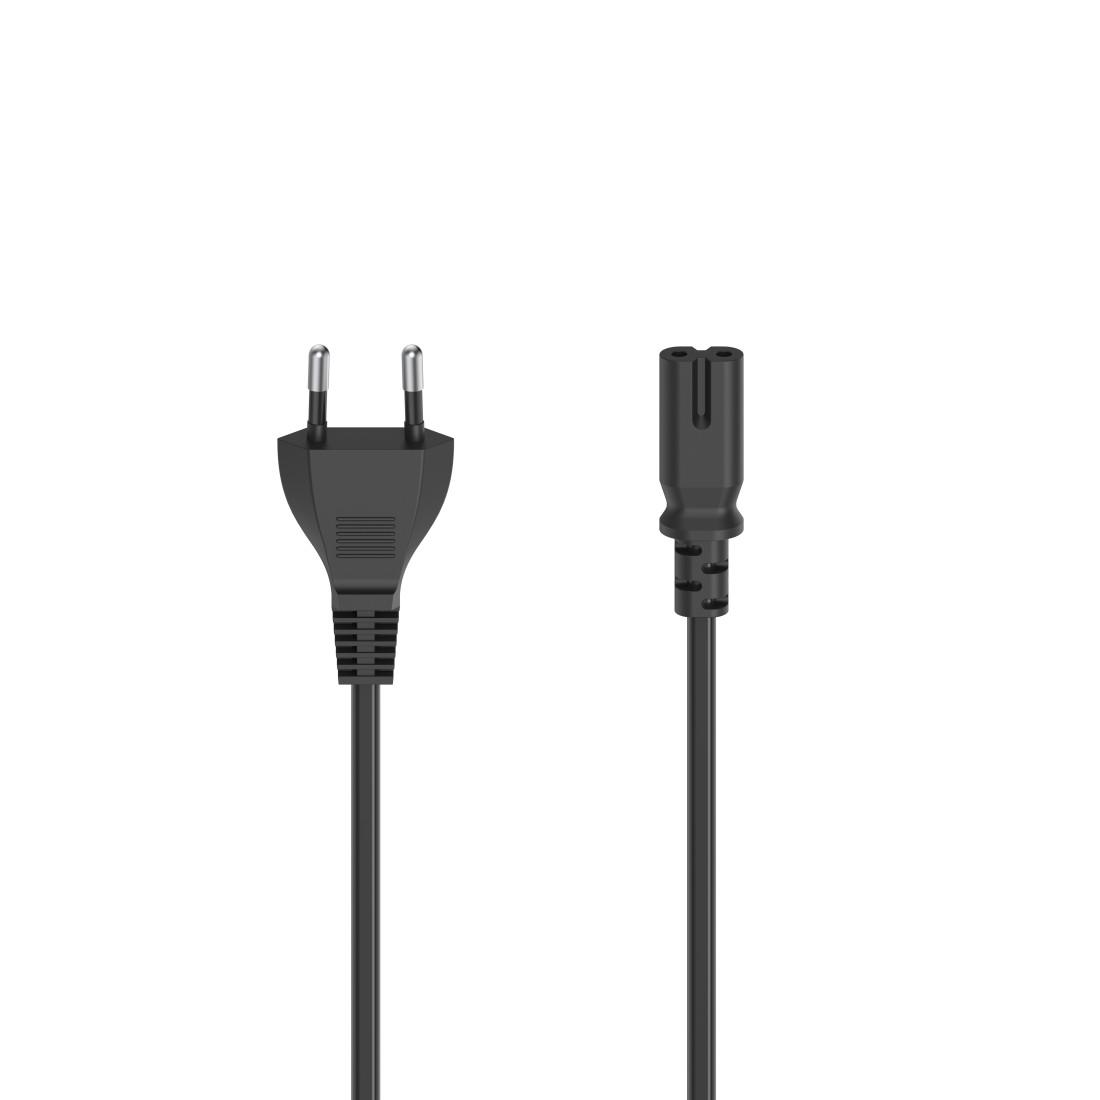 Захранващ кабел HAMA 200732, Euro-plug, 2pin(IEC C7) женско, 1.5 m, Черен